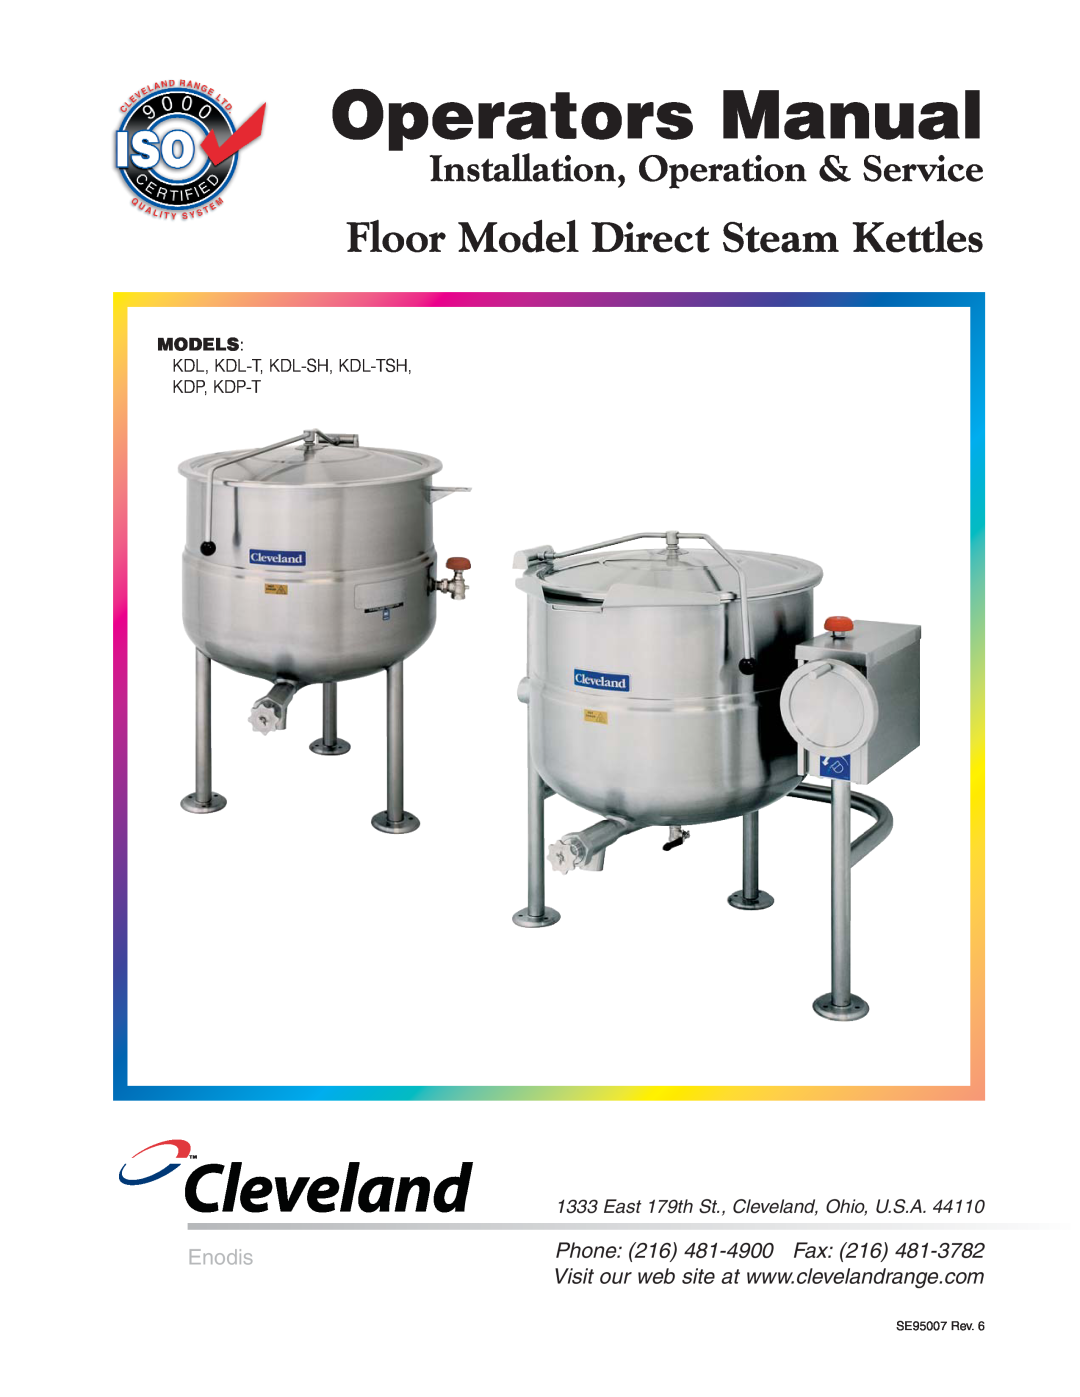 Cleveland Range KDP manual Phone 216 481-4900Fax, Operators Manual, Cleveland, Floor Model Direct Steam Kettles, Enodis 